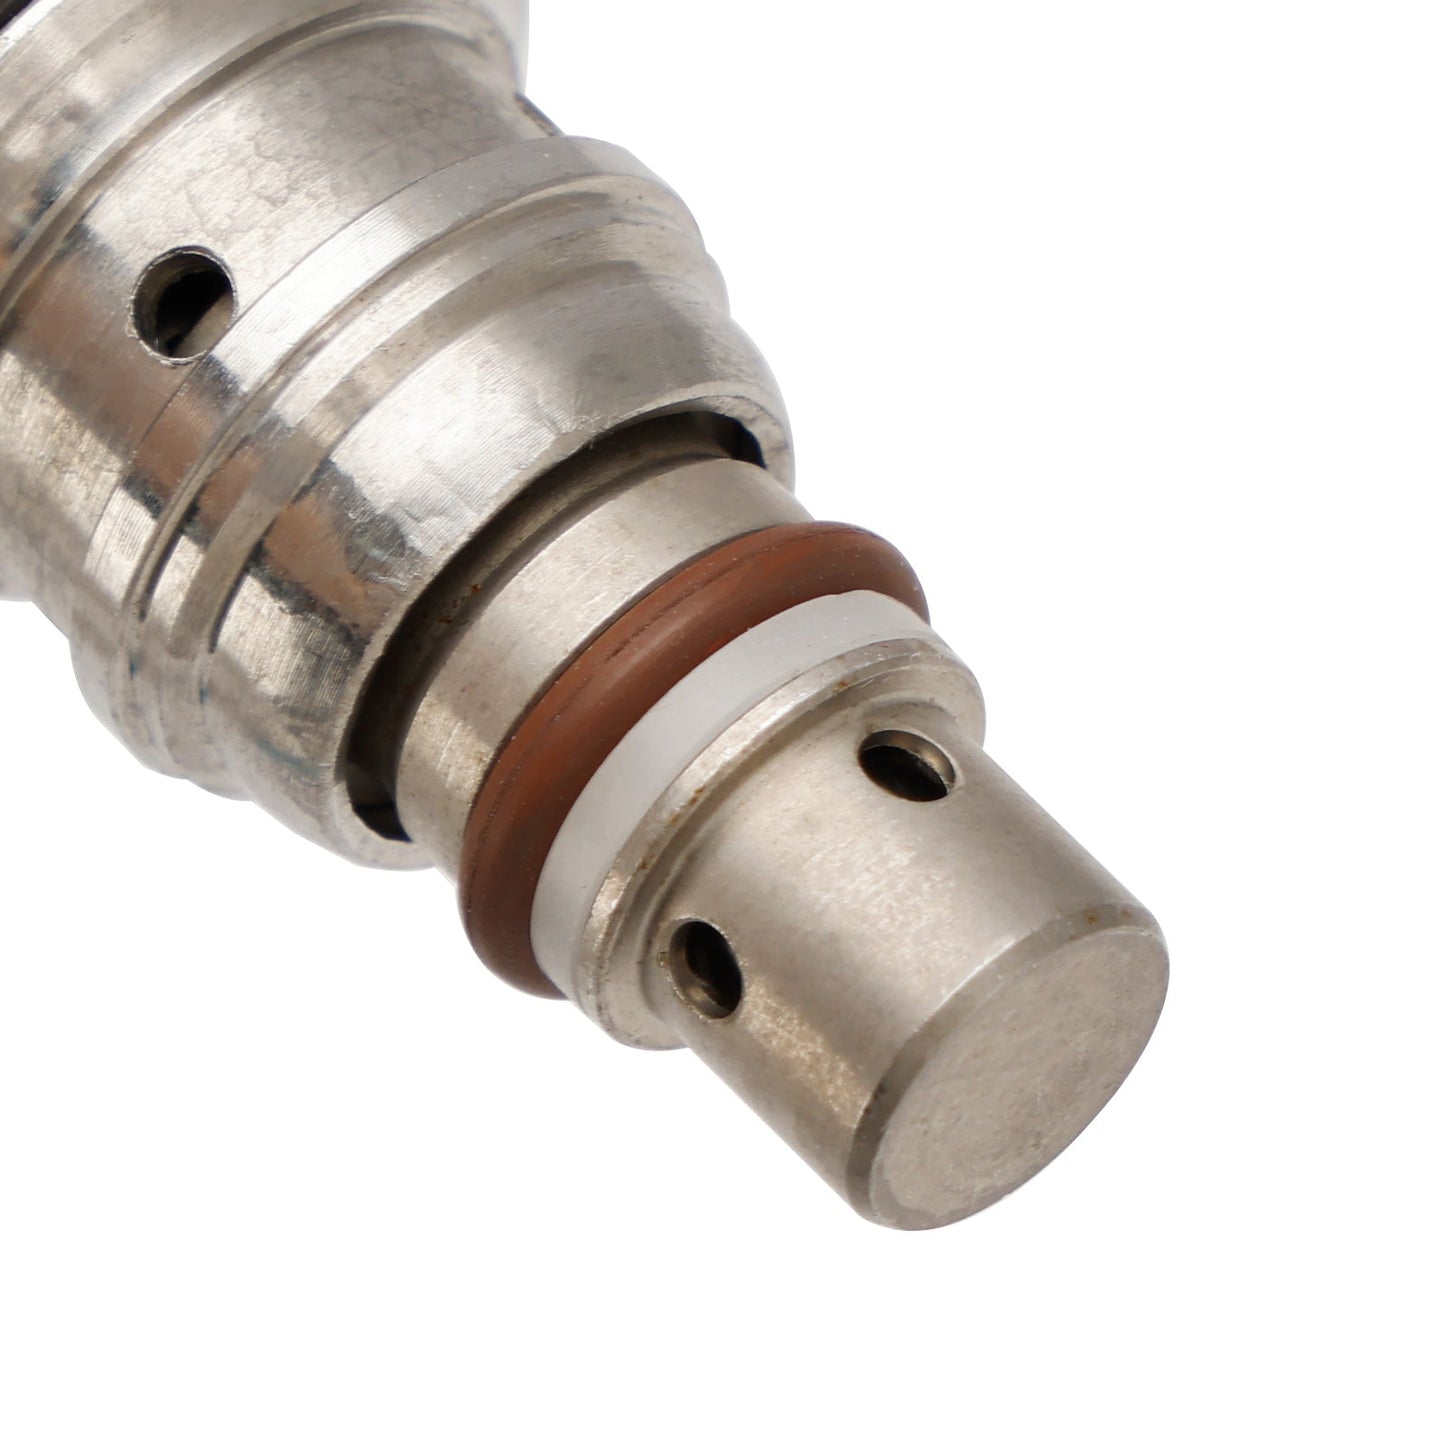 NISSAN ALMERA TINO (V10) 2.2 dCi & Di Diesel Fuel Pump Suction Control Valve 096710-0120